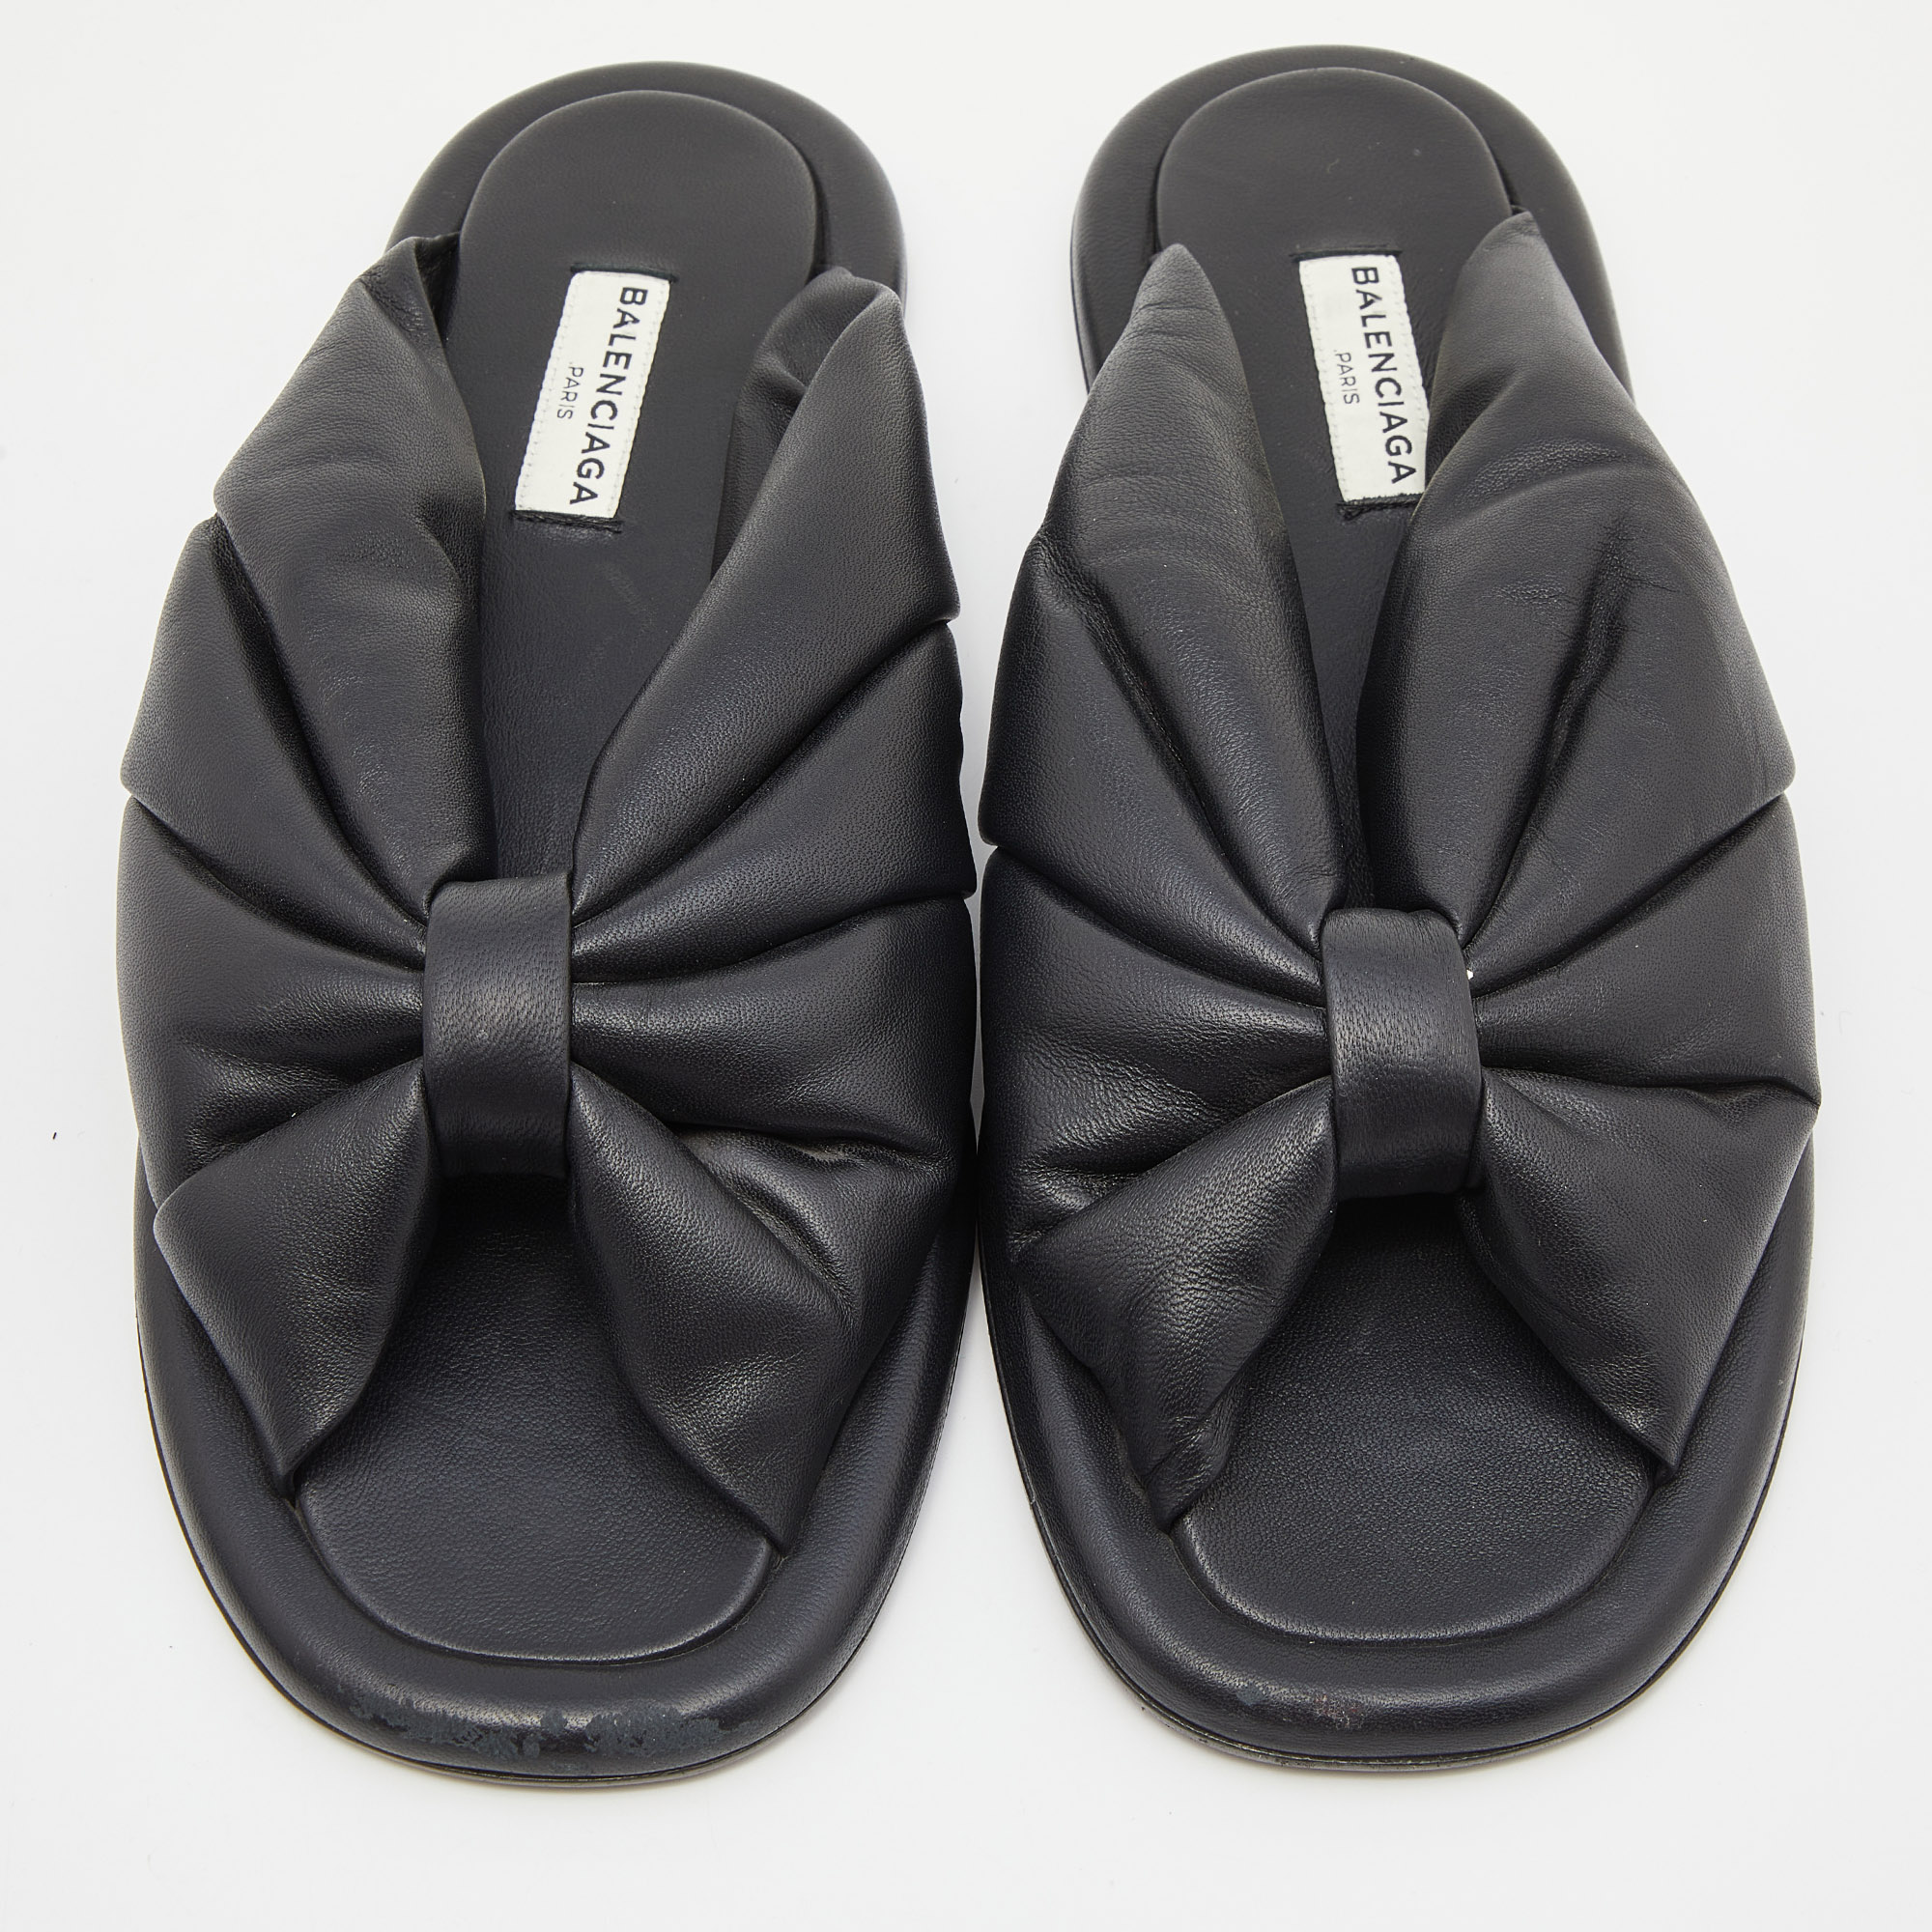 Balenciaga Black Leather Drapy Flats Slides Size 37